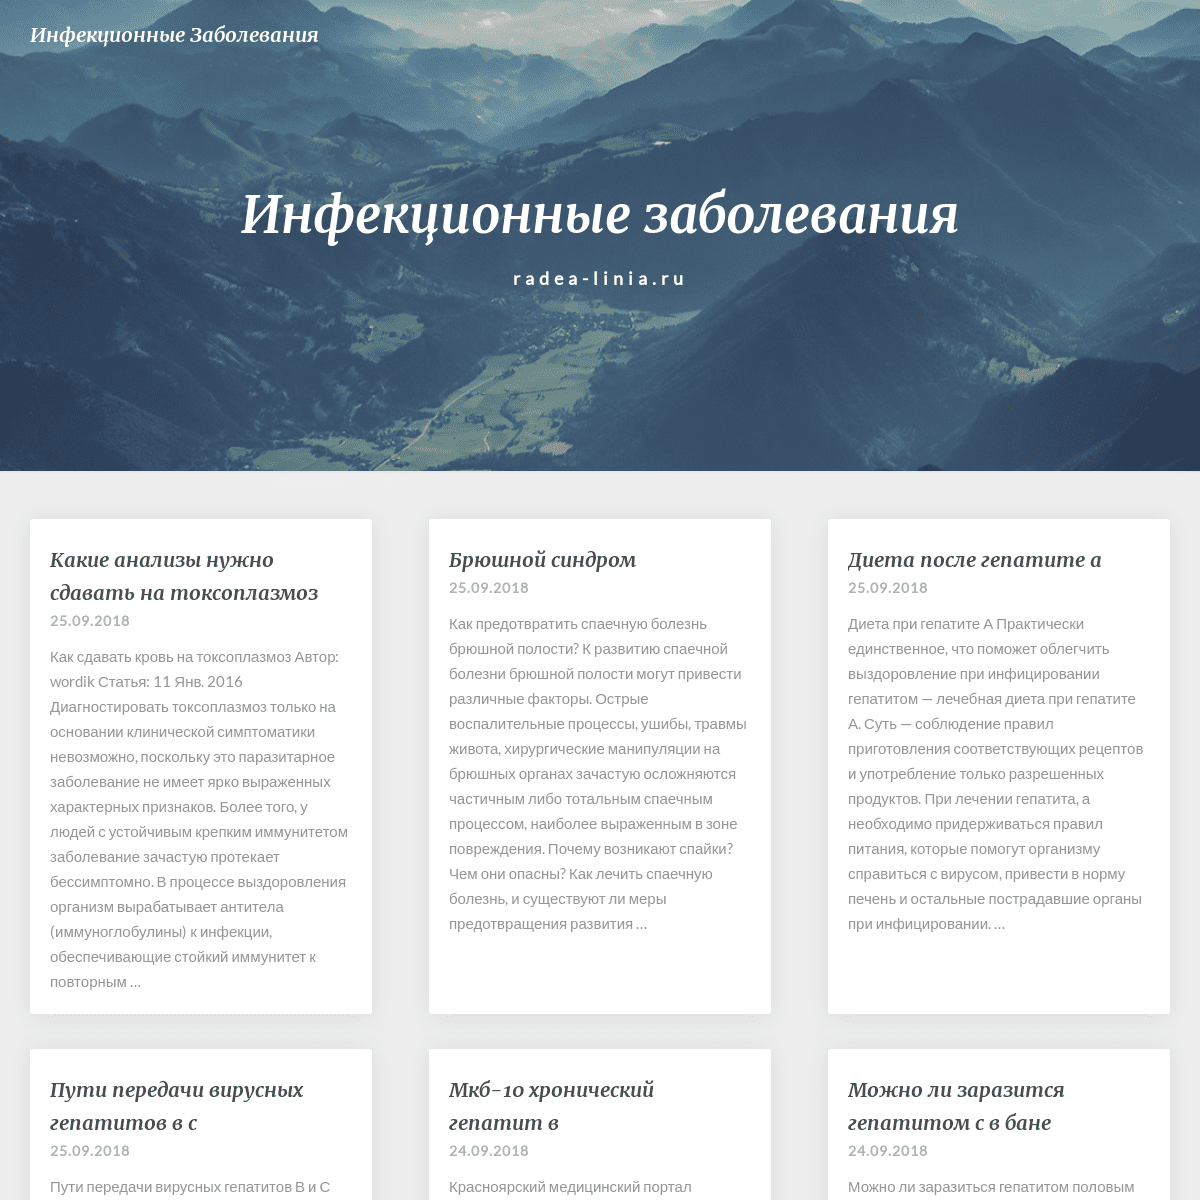 A complete backup of radea-linia.ru